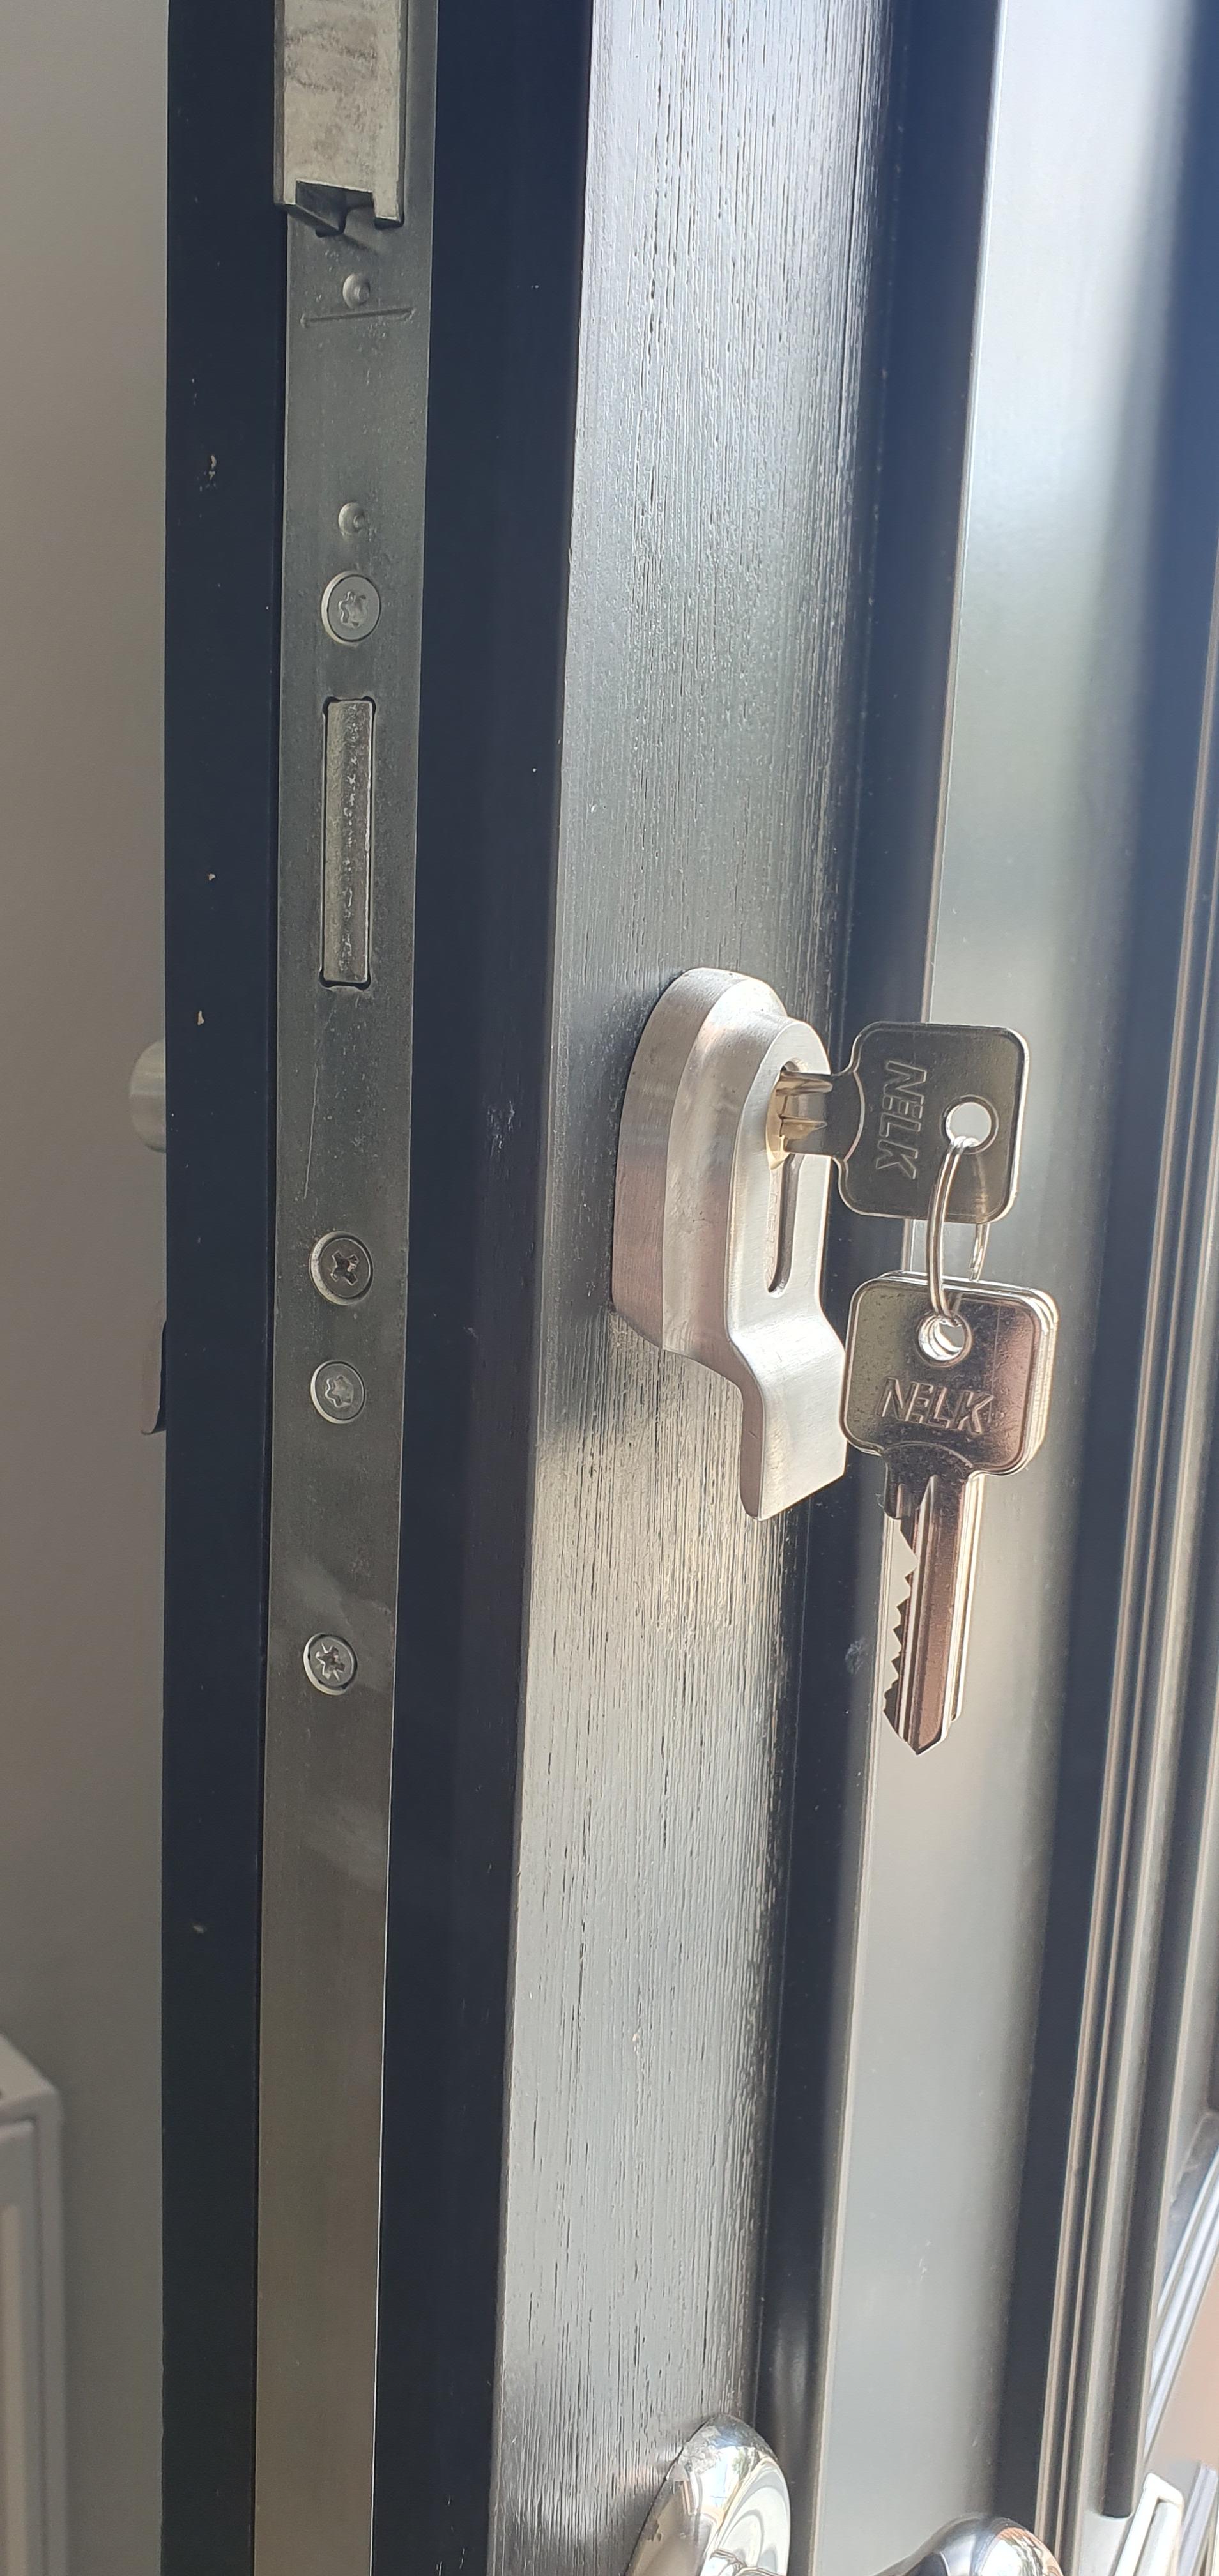 A residential door unlocked by AD Locksmithing